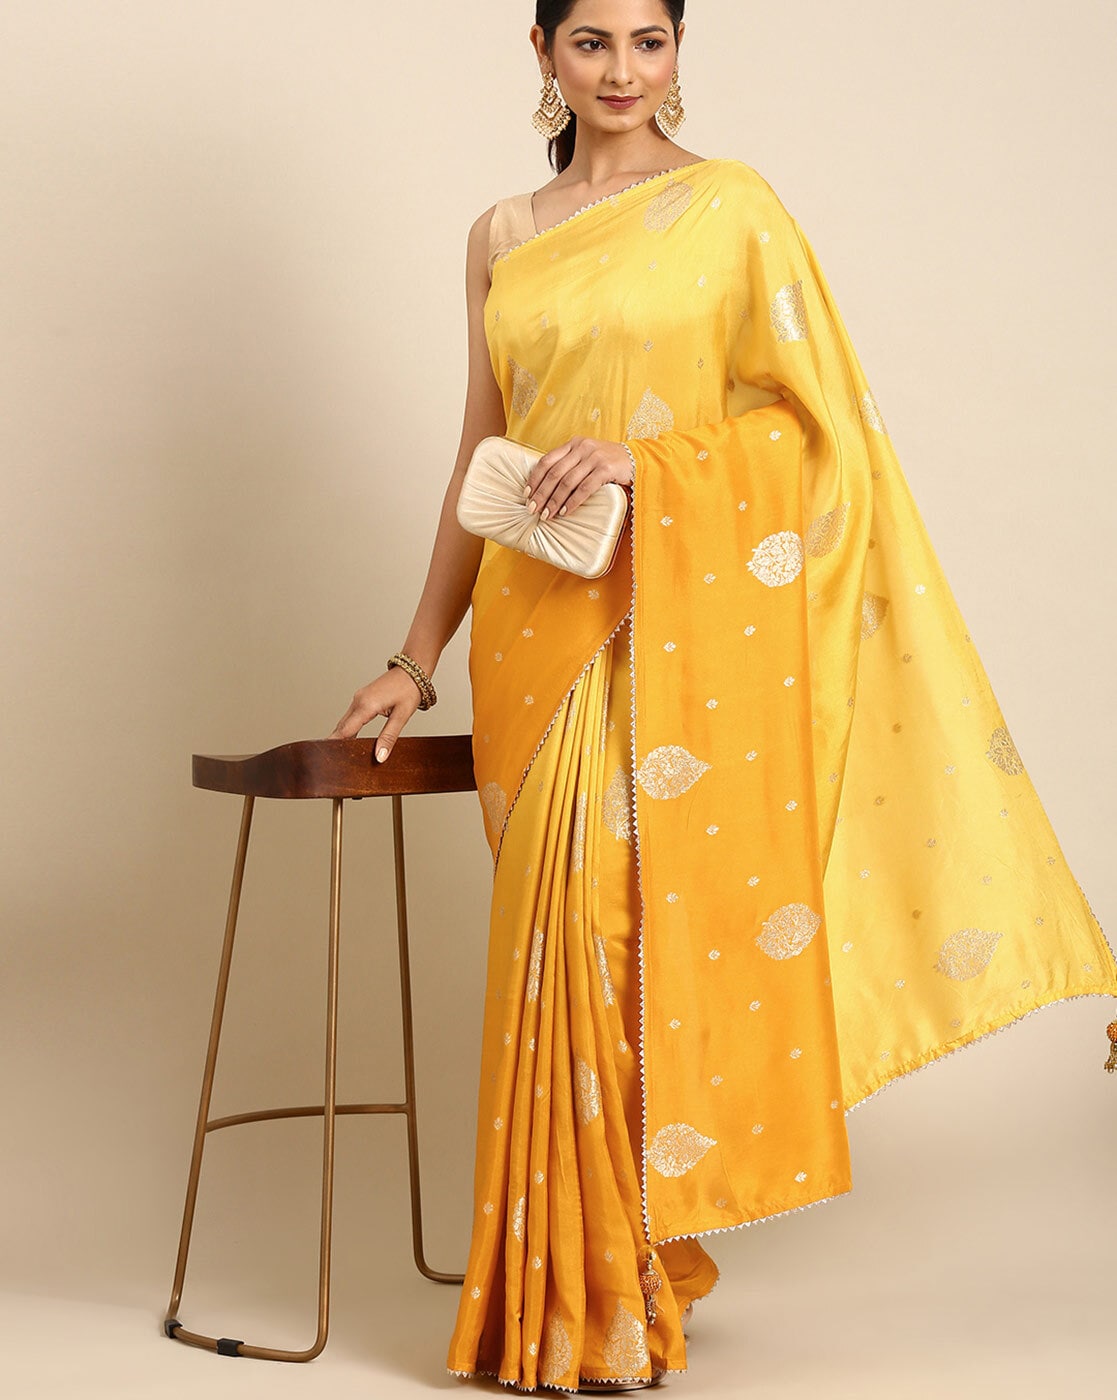 Buy Sensuous Yellow Saree Online in Australia @Mohey - Saree for Women